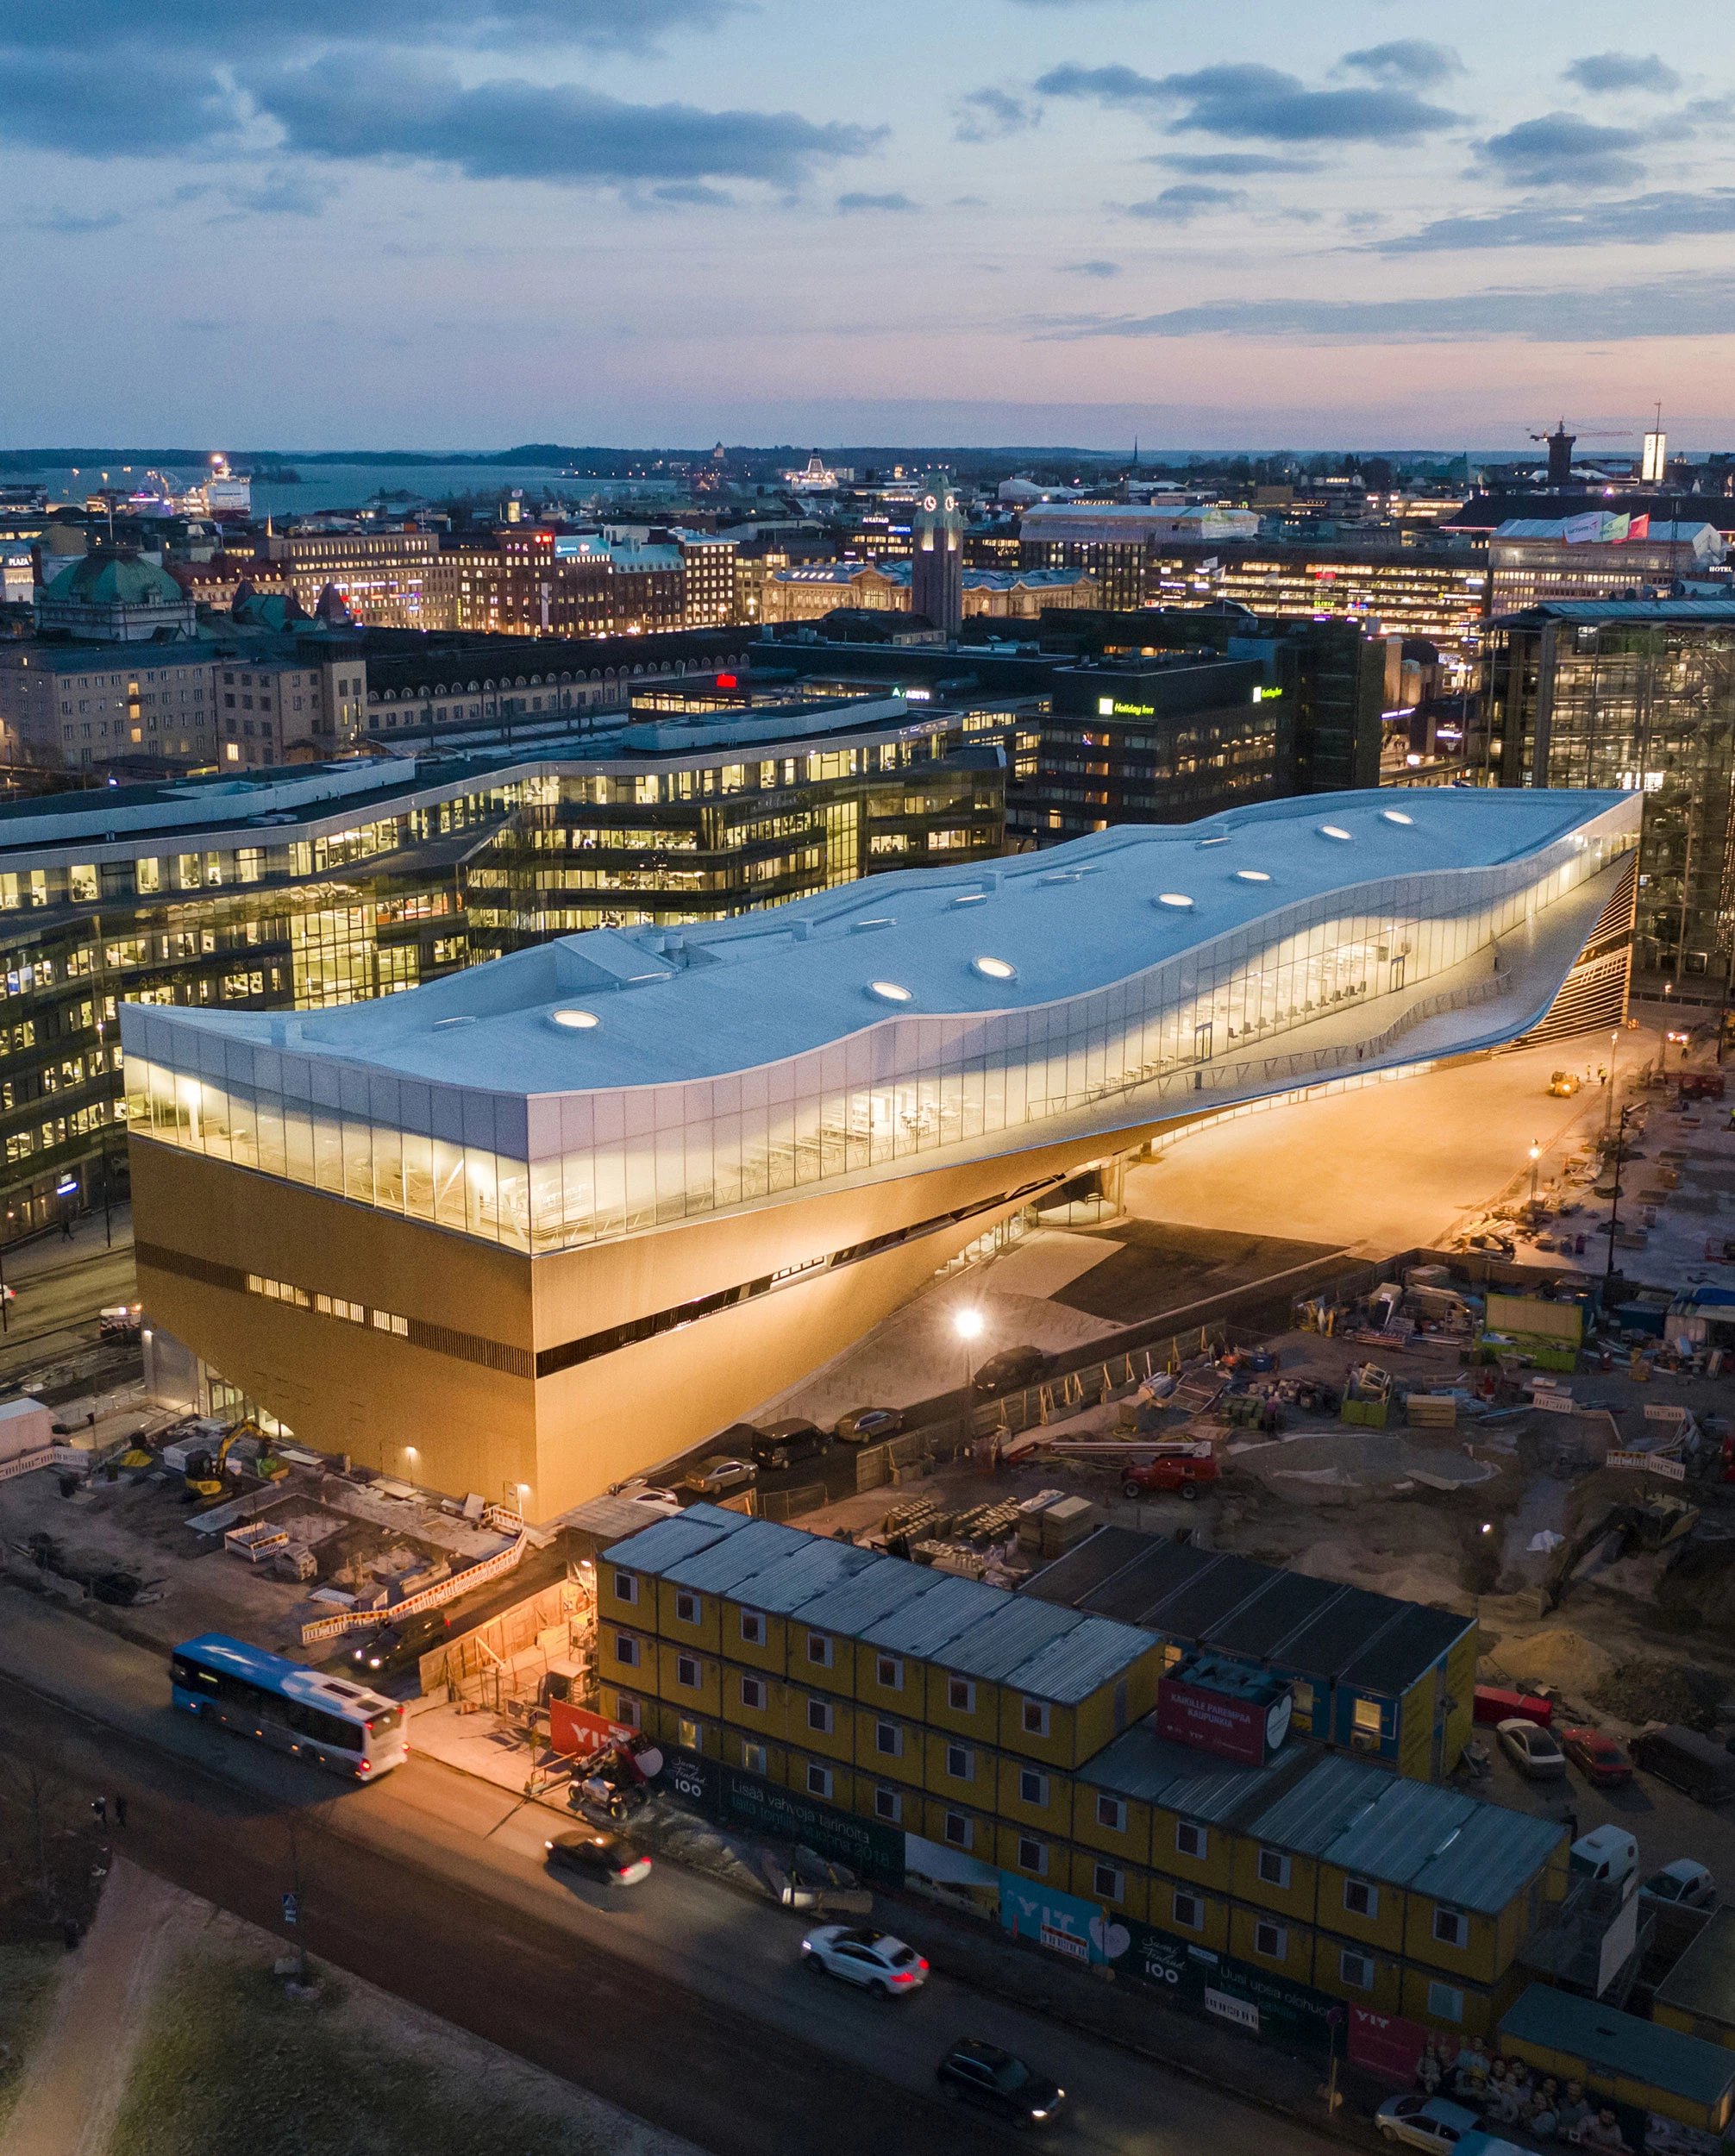 Oodi Central Library opens in Helsinki